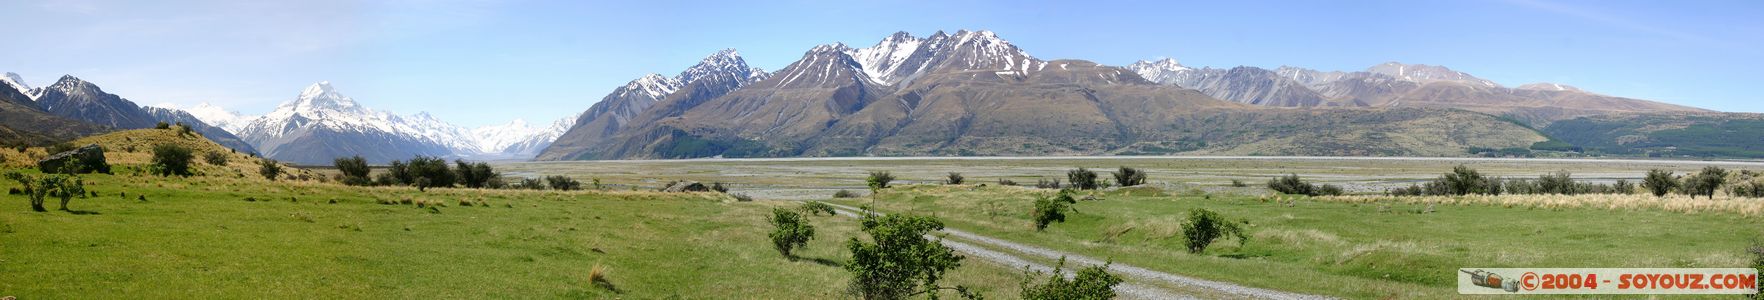 Aoraki / Mount Cook - panorama
Mots-clés: New Zealand South Island patrimoine unesco Montagne Neige panorama